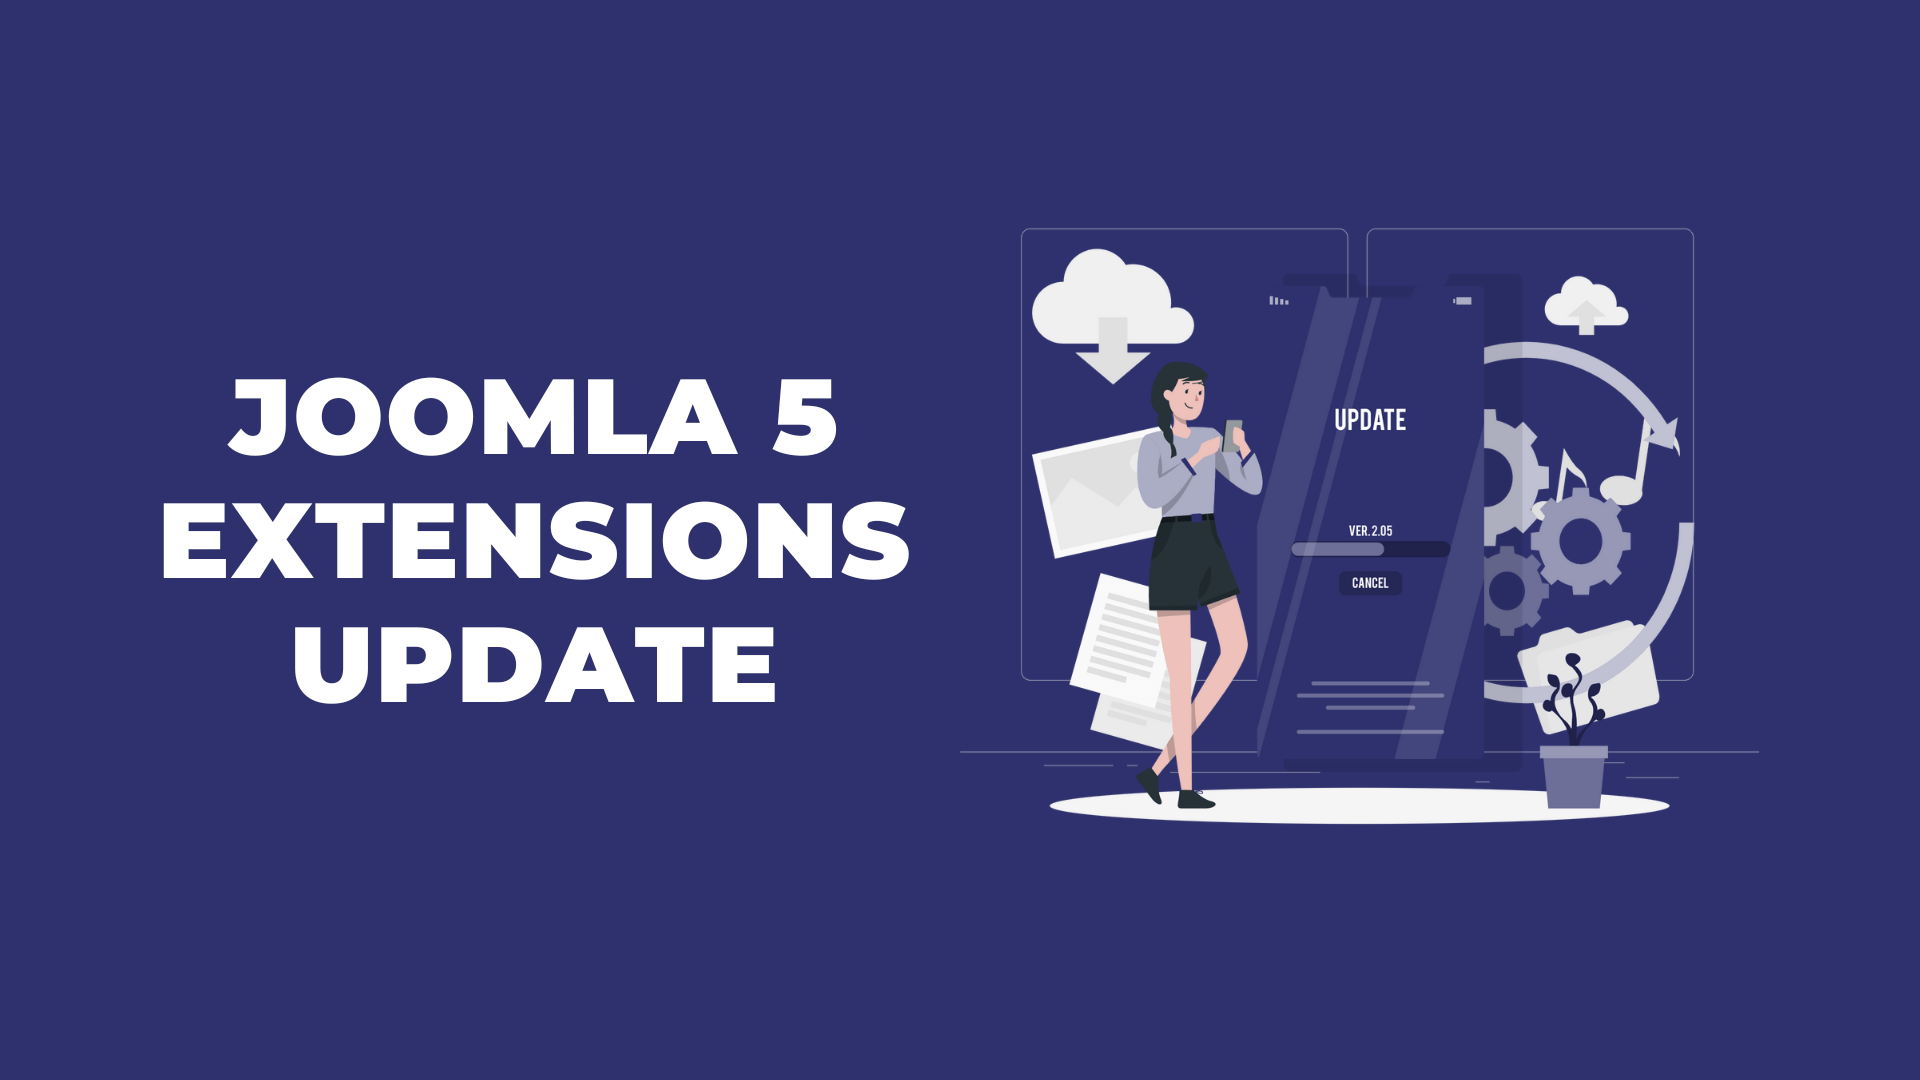 Joomla News: Joomla Extensions Update to Joomla 5